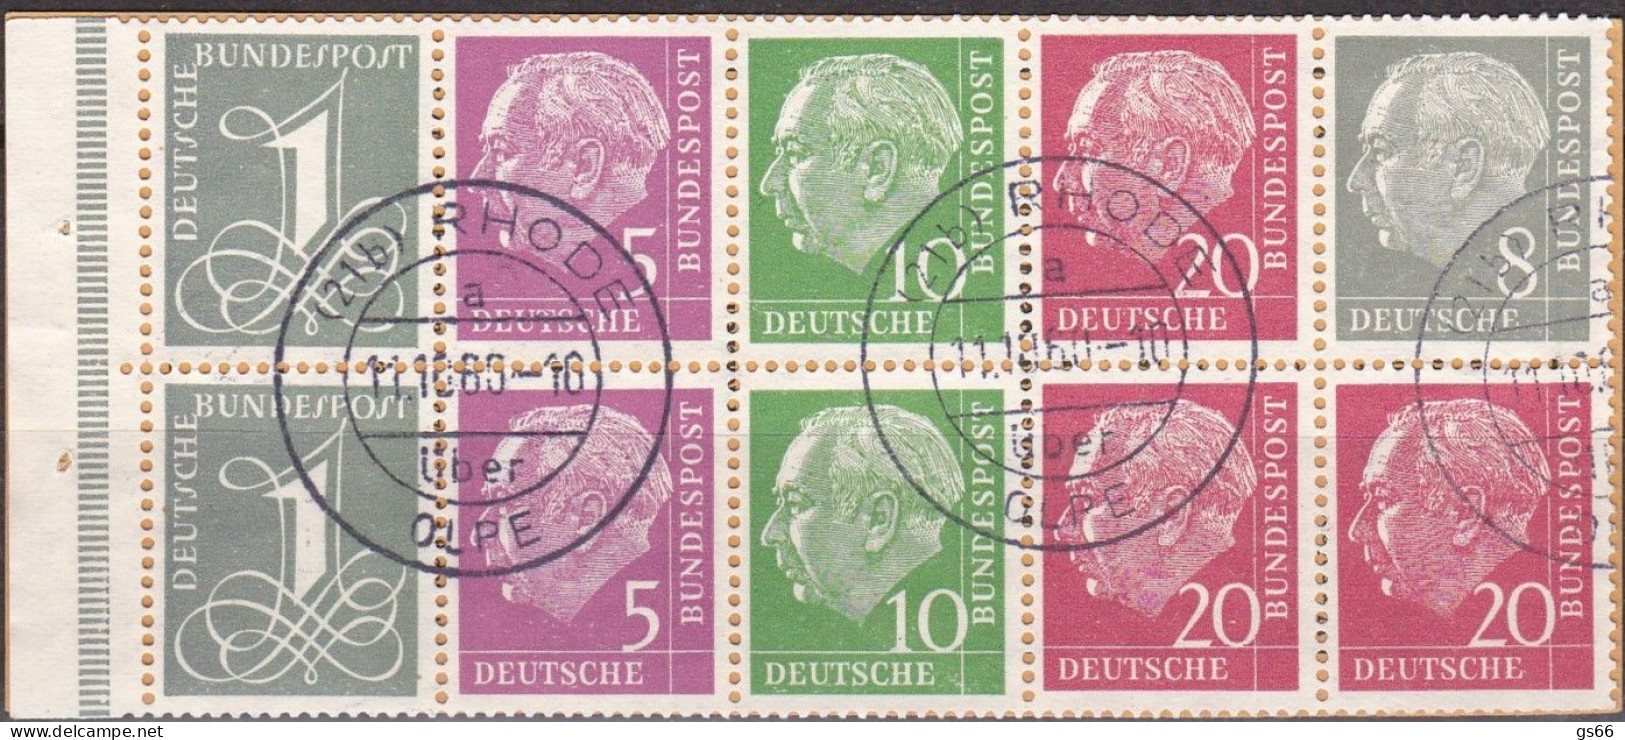 Bund , 1960, MH 4 Y II,  Heuss + Ziffer, Ohne Randleiste, Used, Stempel (21b) Rhode über Olpe - 1951-1970